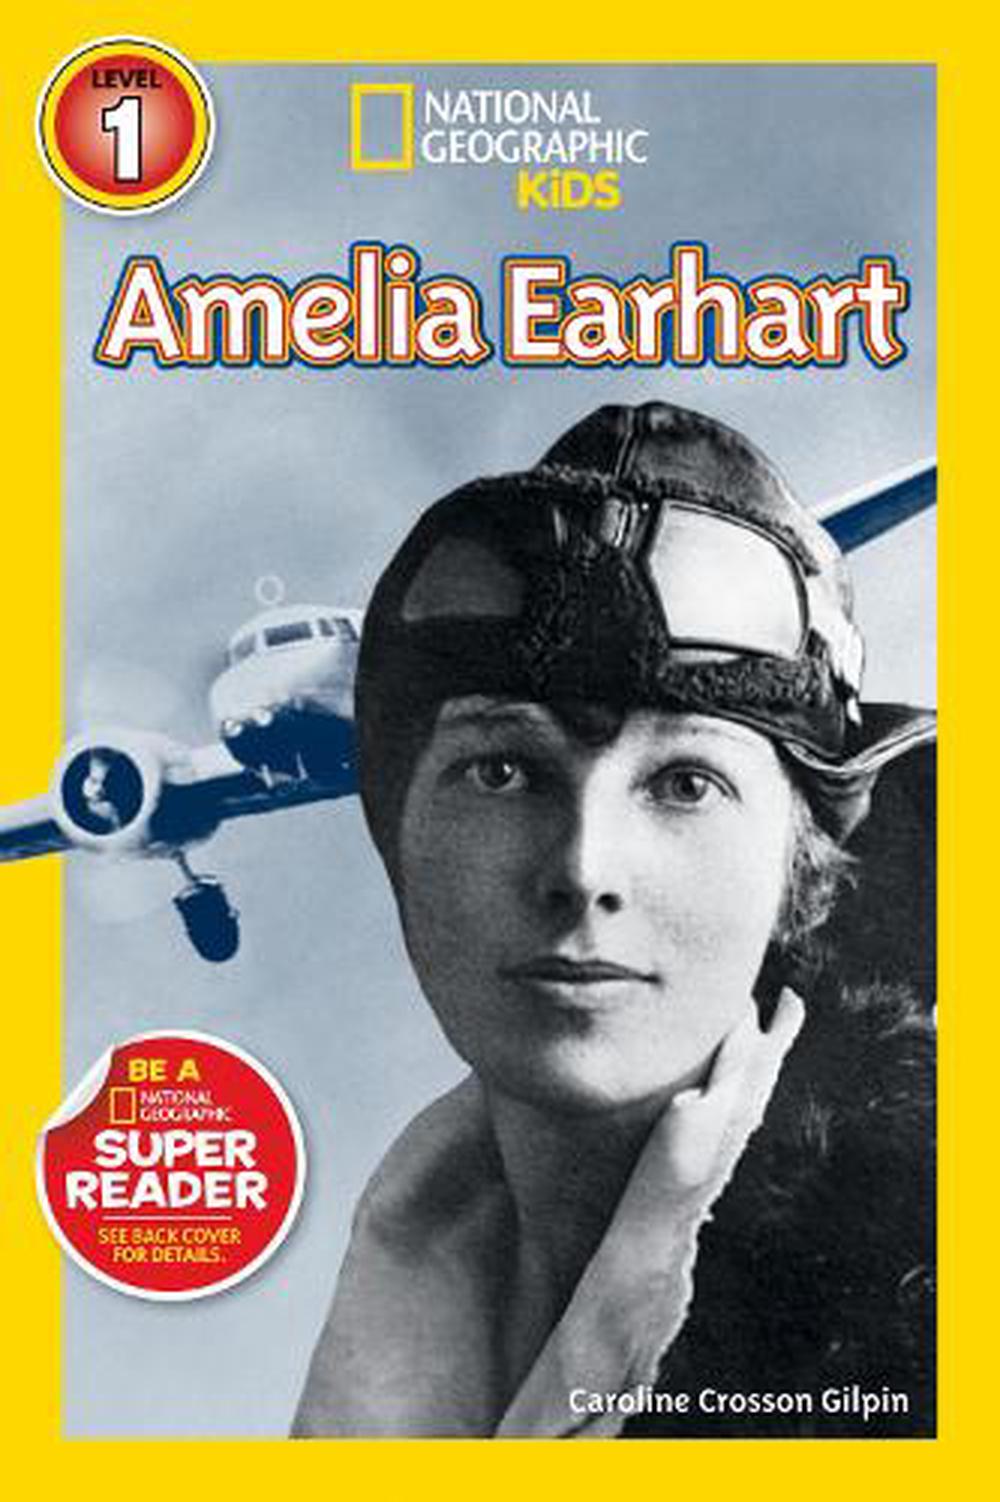 National Geographic Readers Amelia Earhart by Caroline